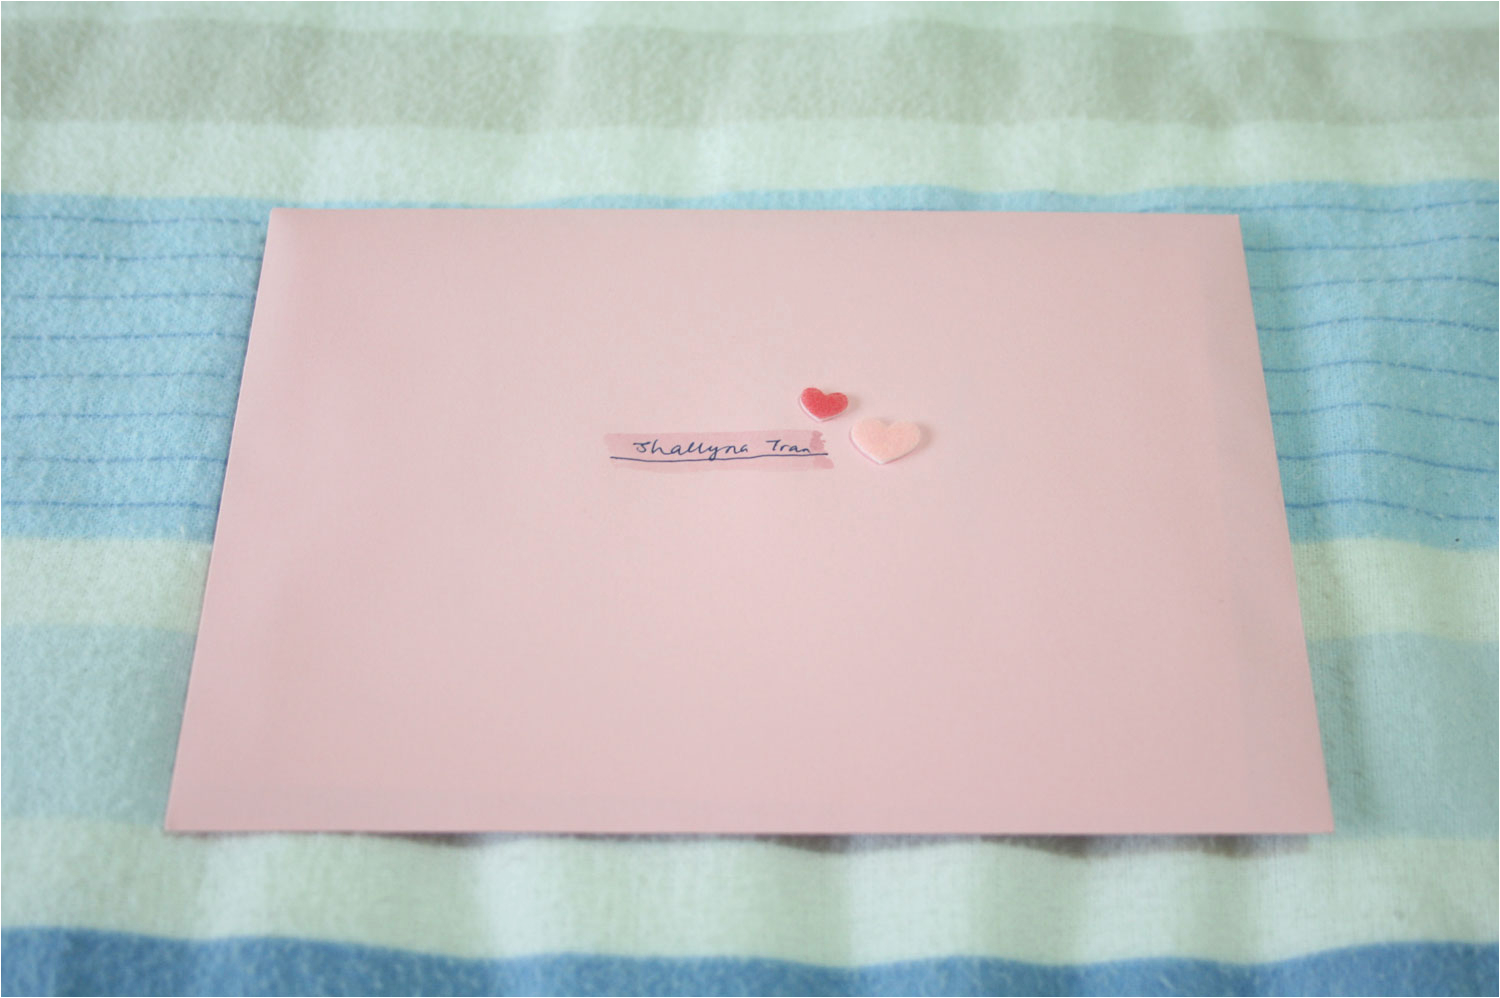 what-to-write-on-the-envelope-of-a-birthday-card-birthdaybuzz